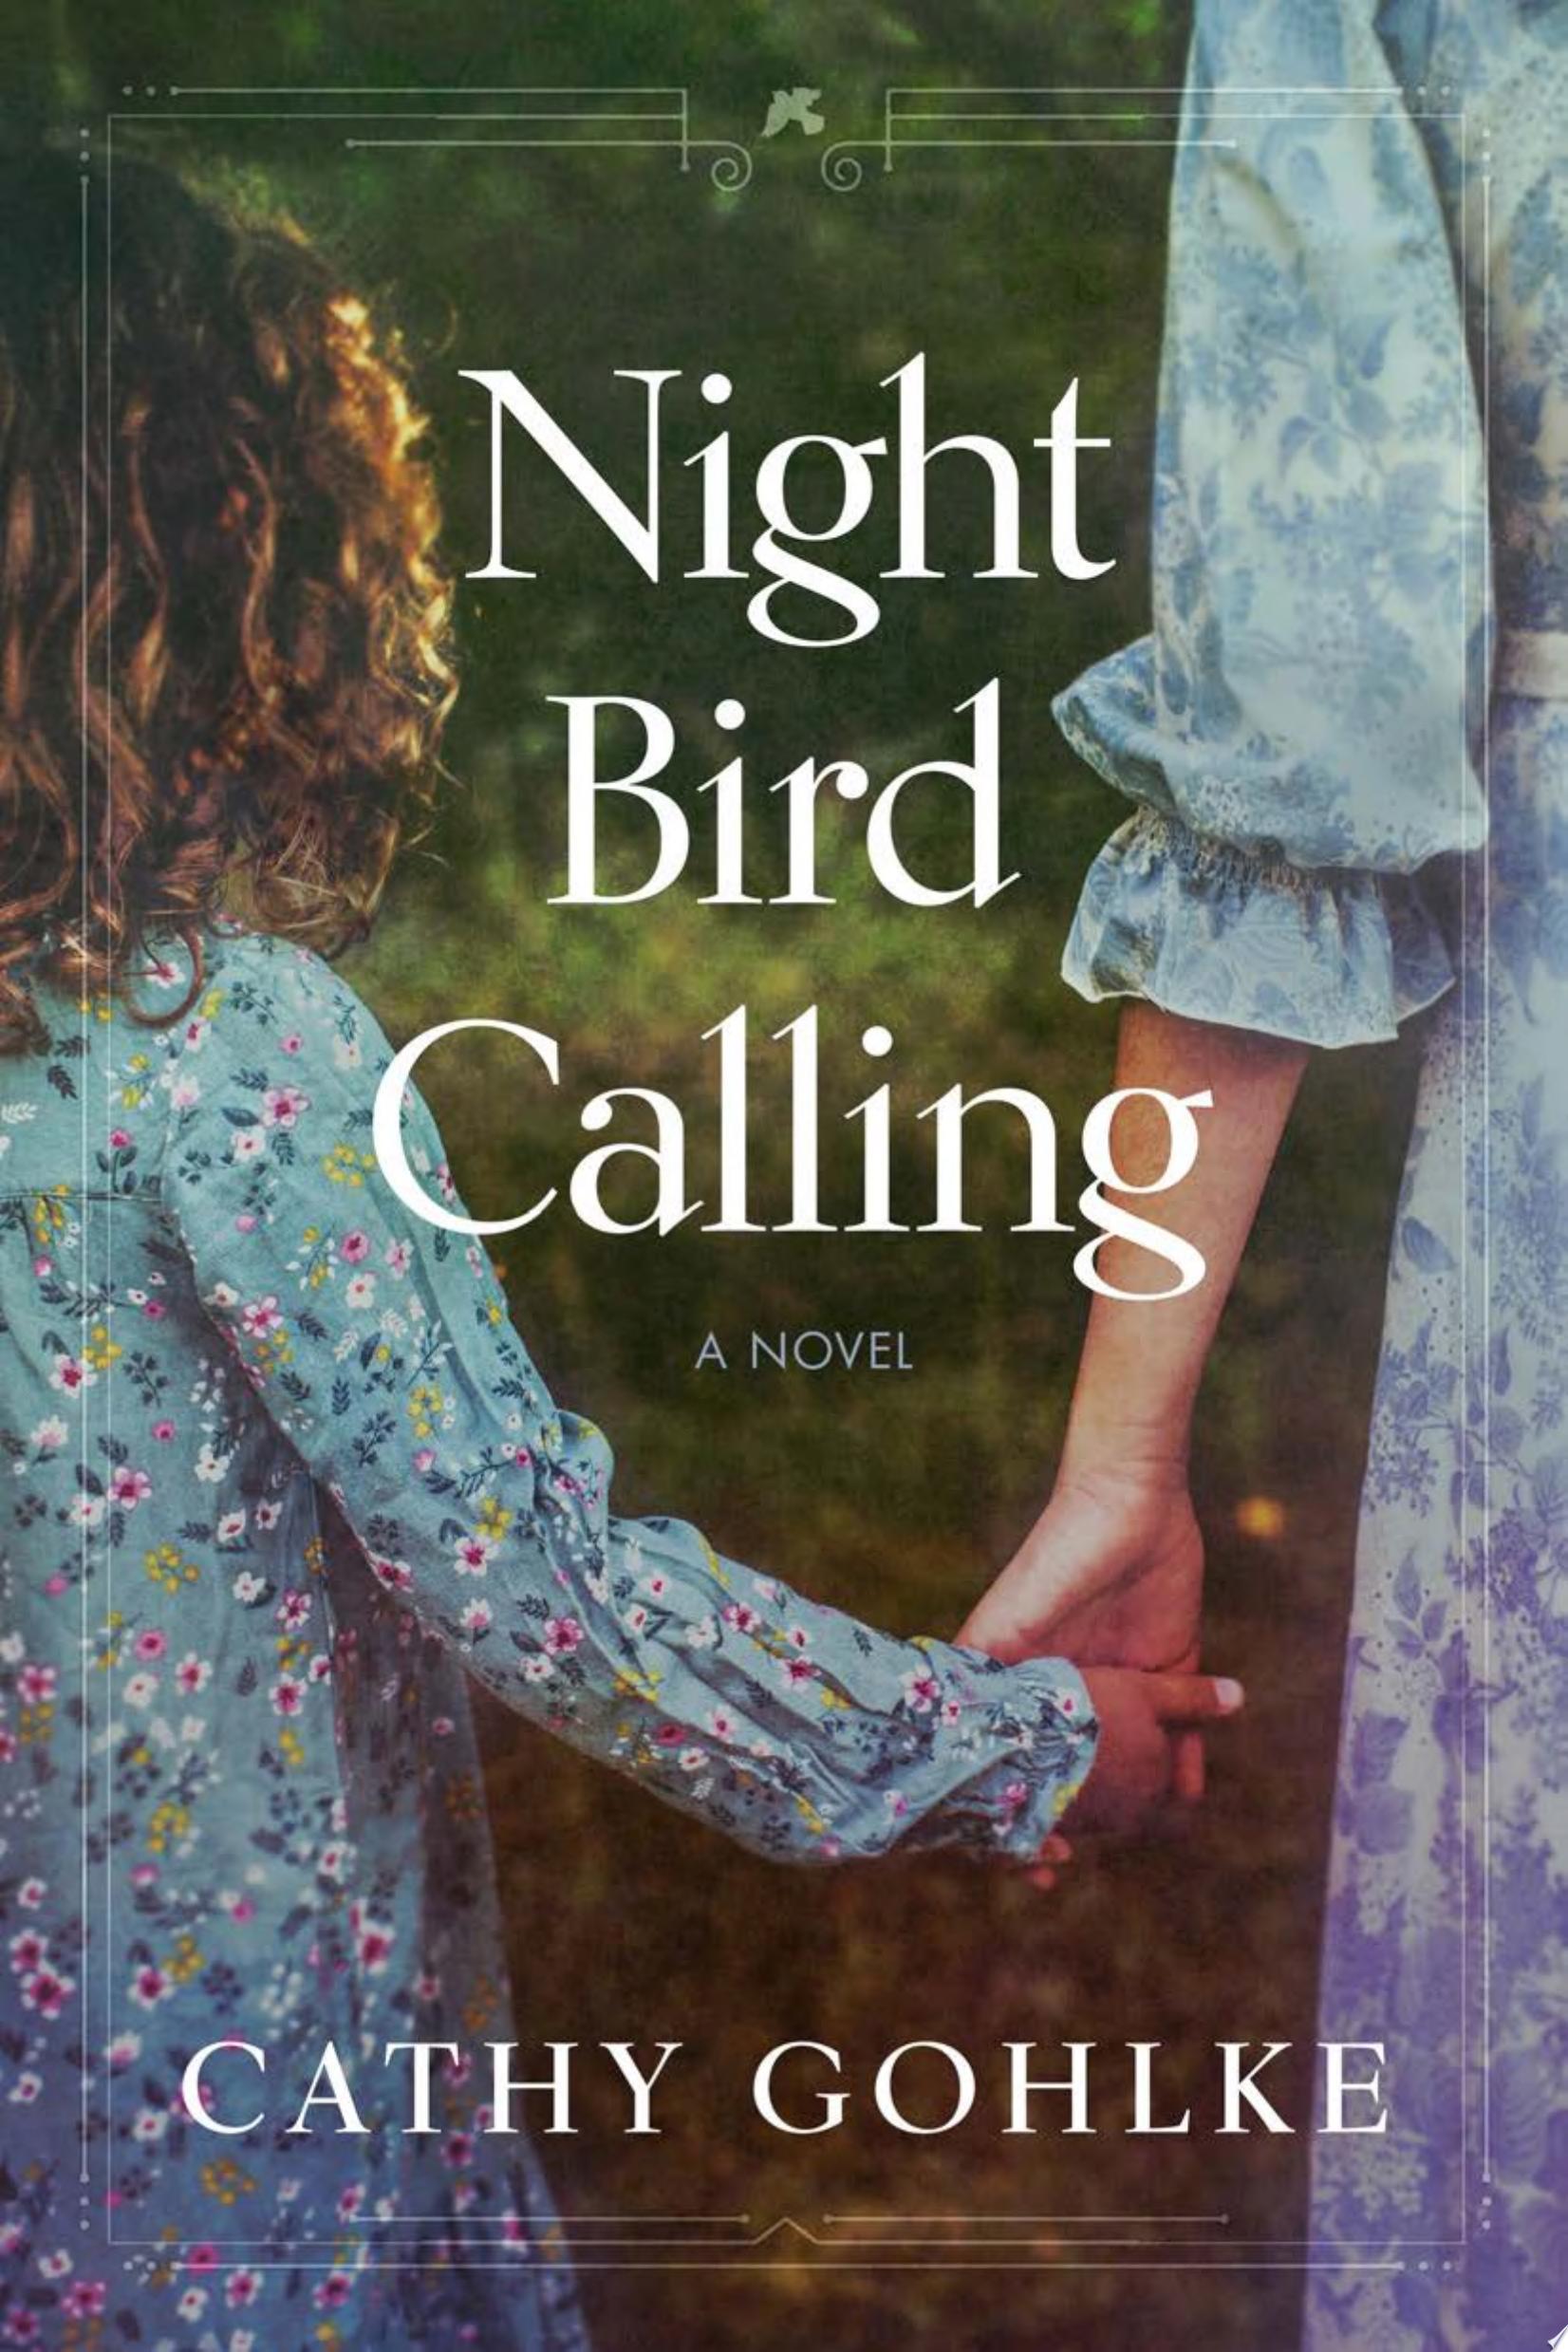 Image for "Night Bird Calling"